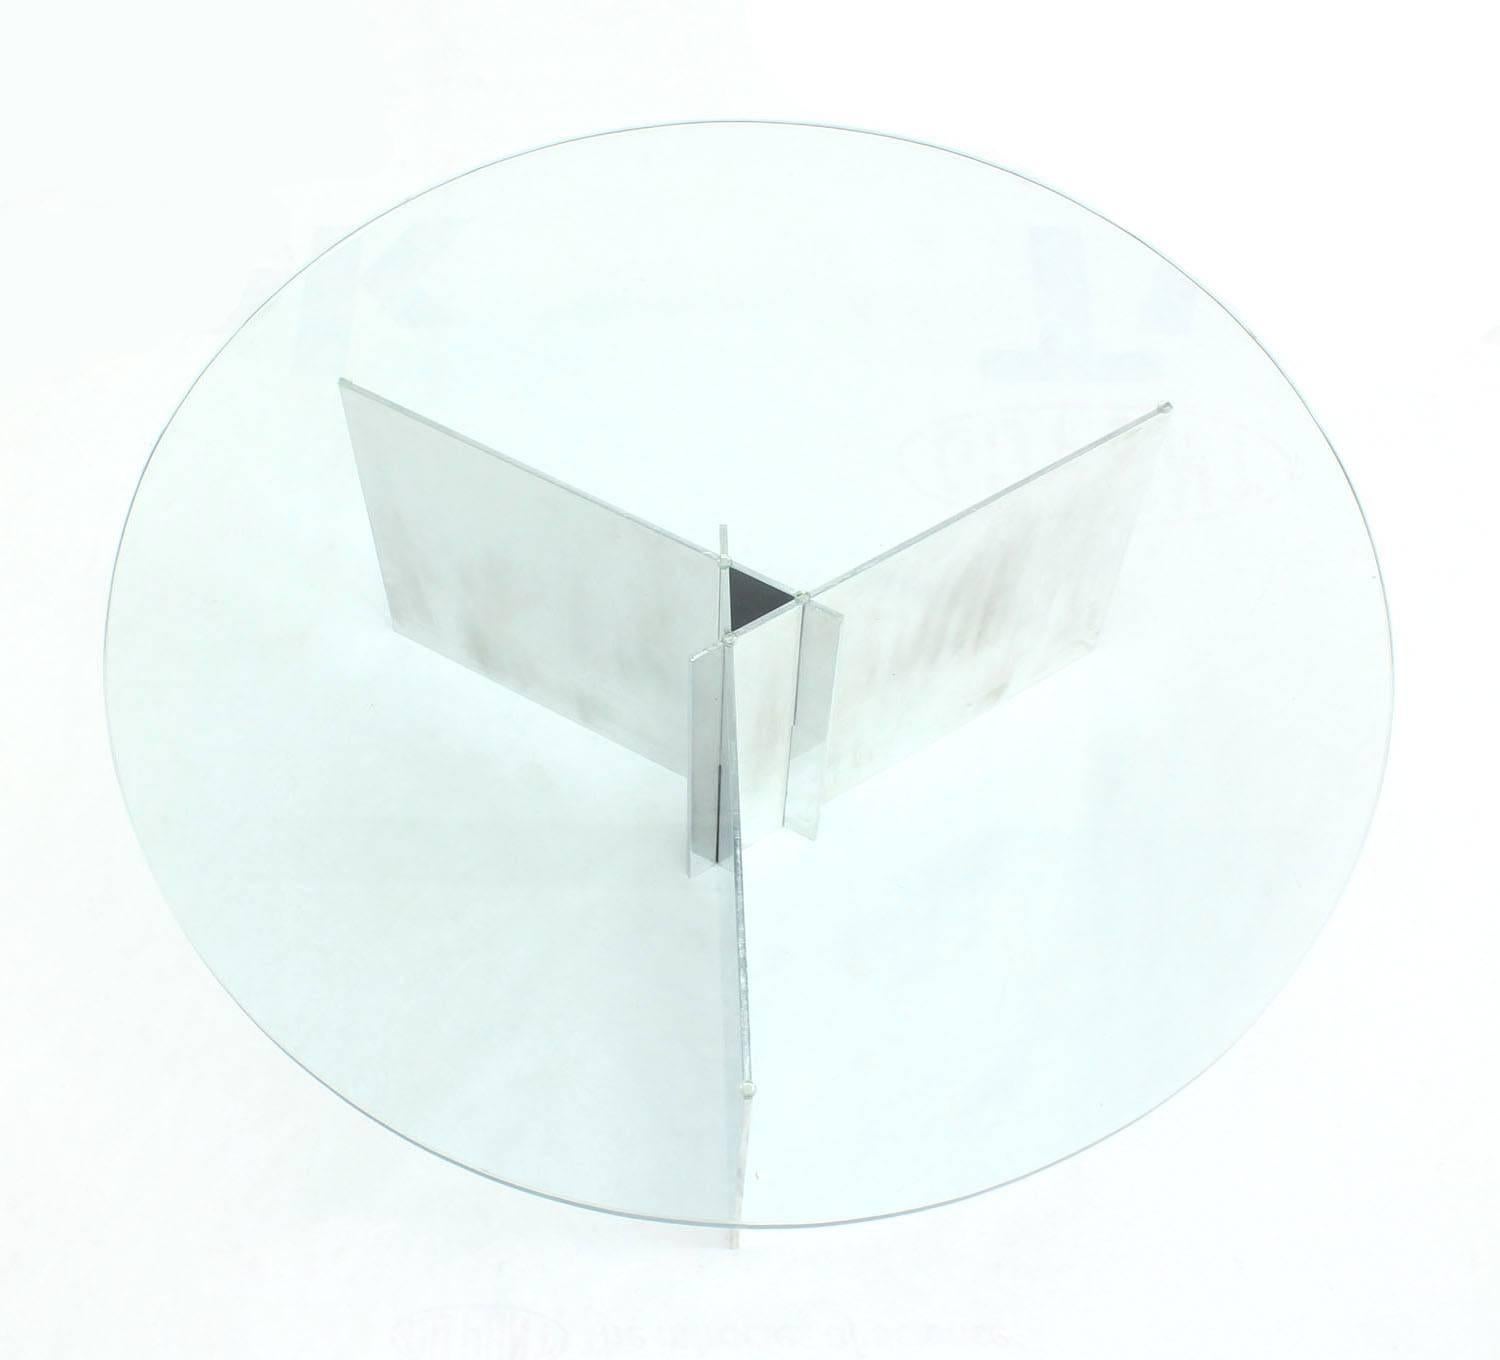 Aluminum Paul Mayen for Habitat Triangular Base Round Glass Top Coffee Table